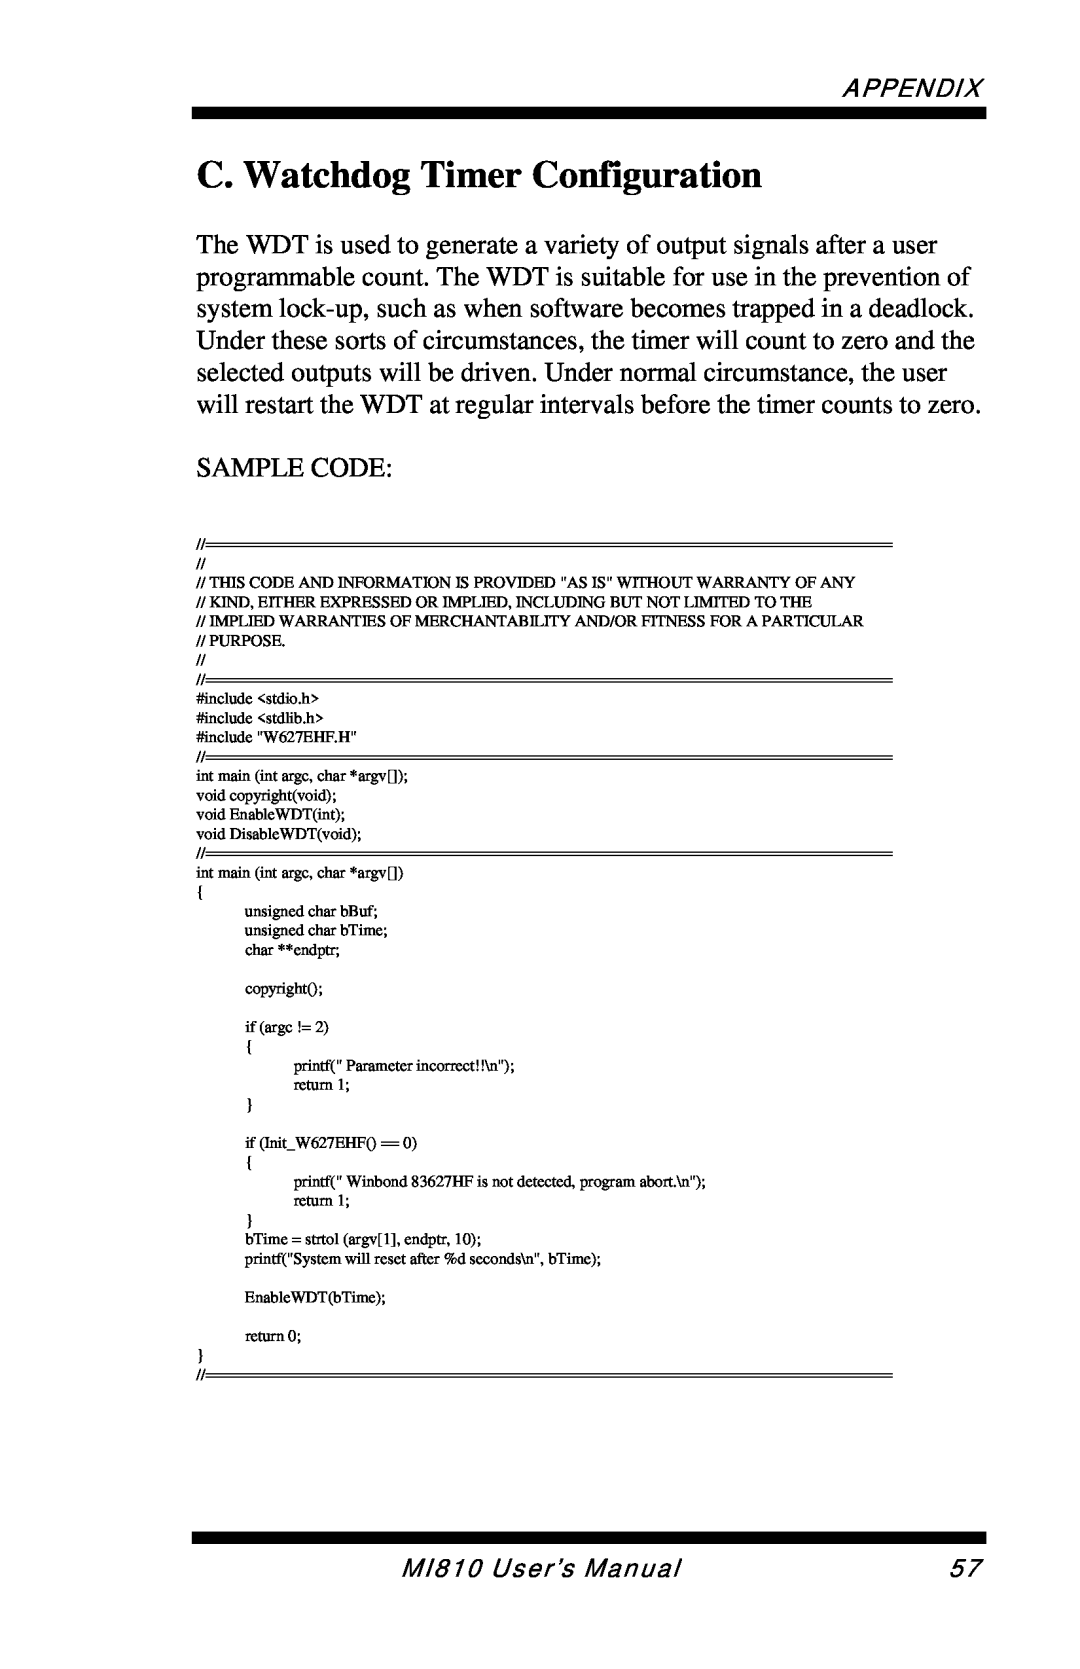 Intel user manual C. Watchdog Timer Configuration, Sample Code, Appendix, MI810 User’s Manual 